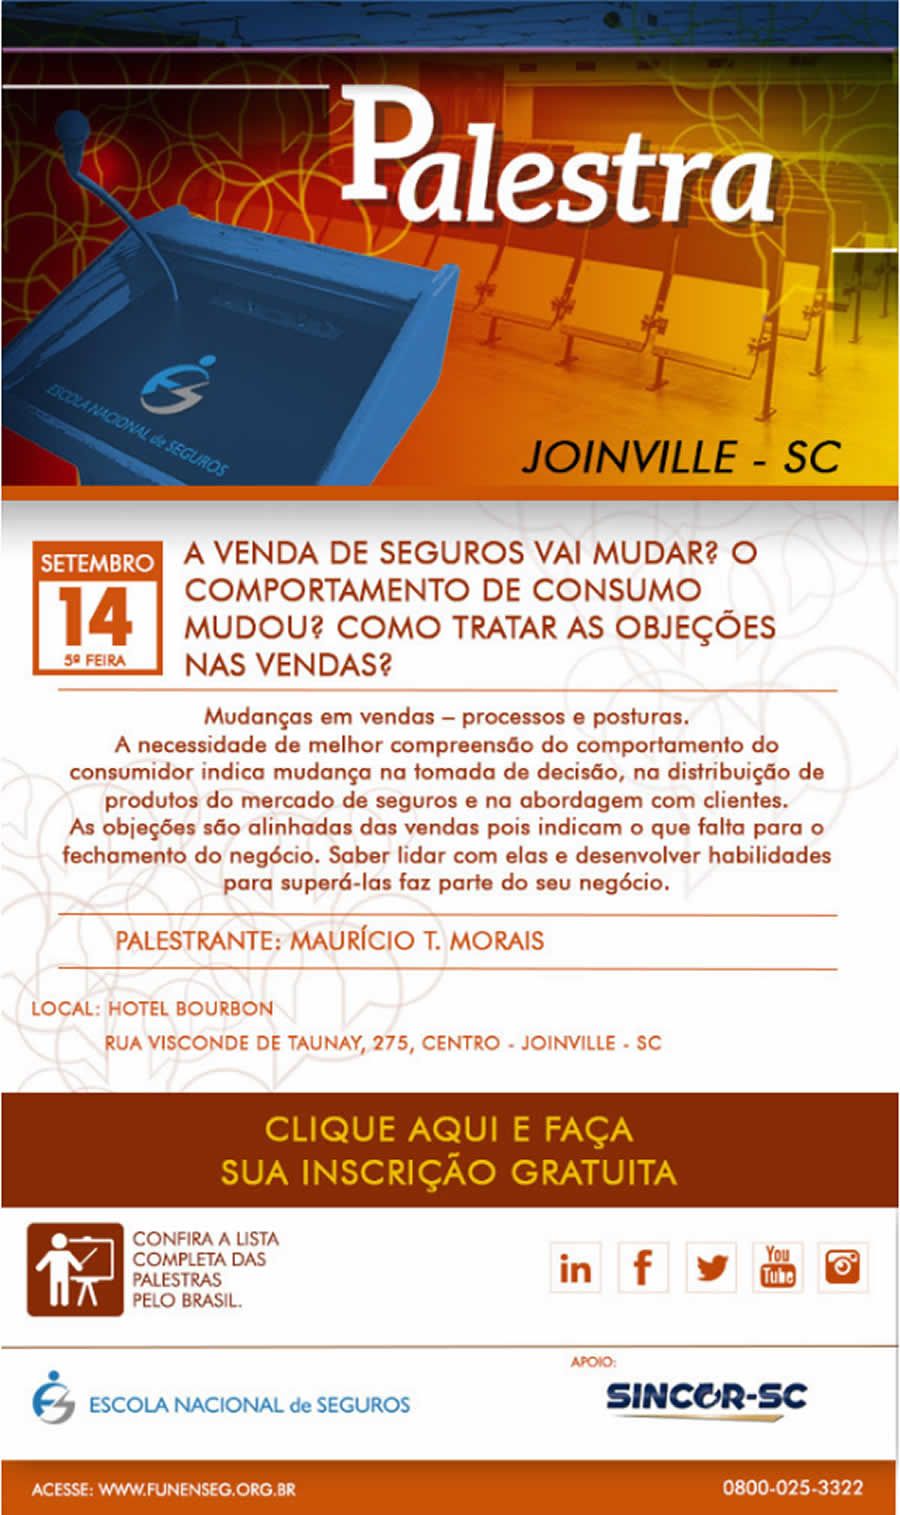 SincorSC Apoia Palestra em Joinville